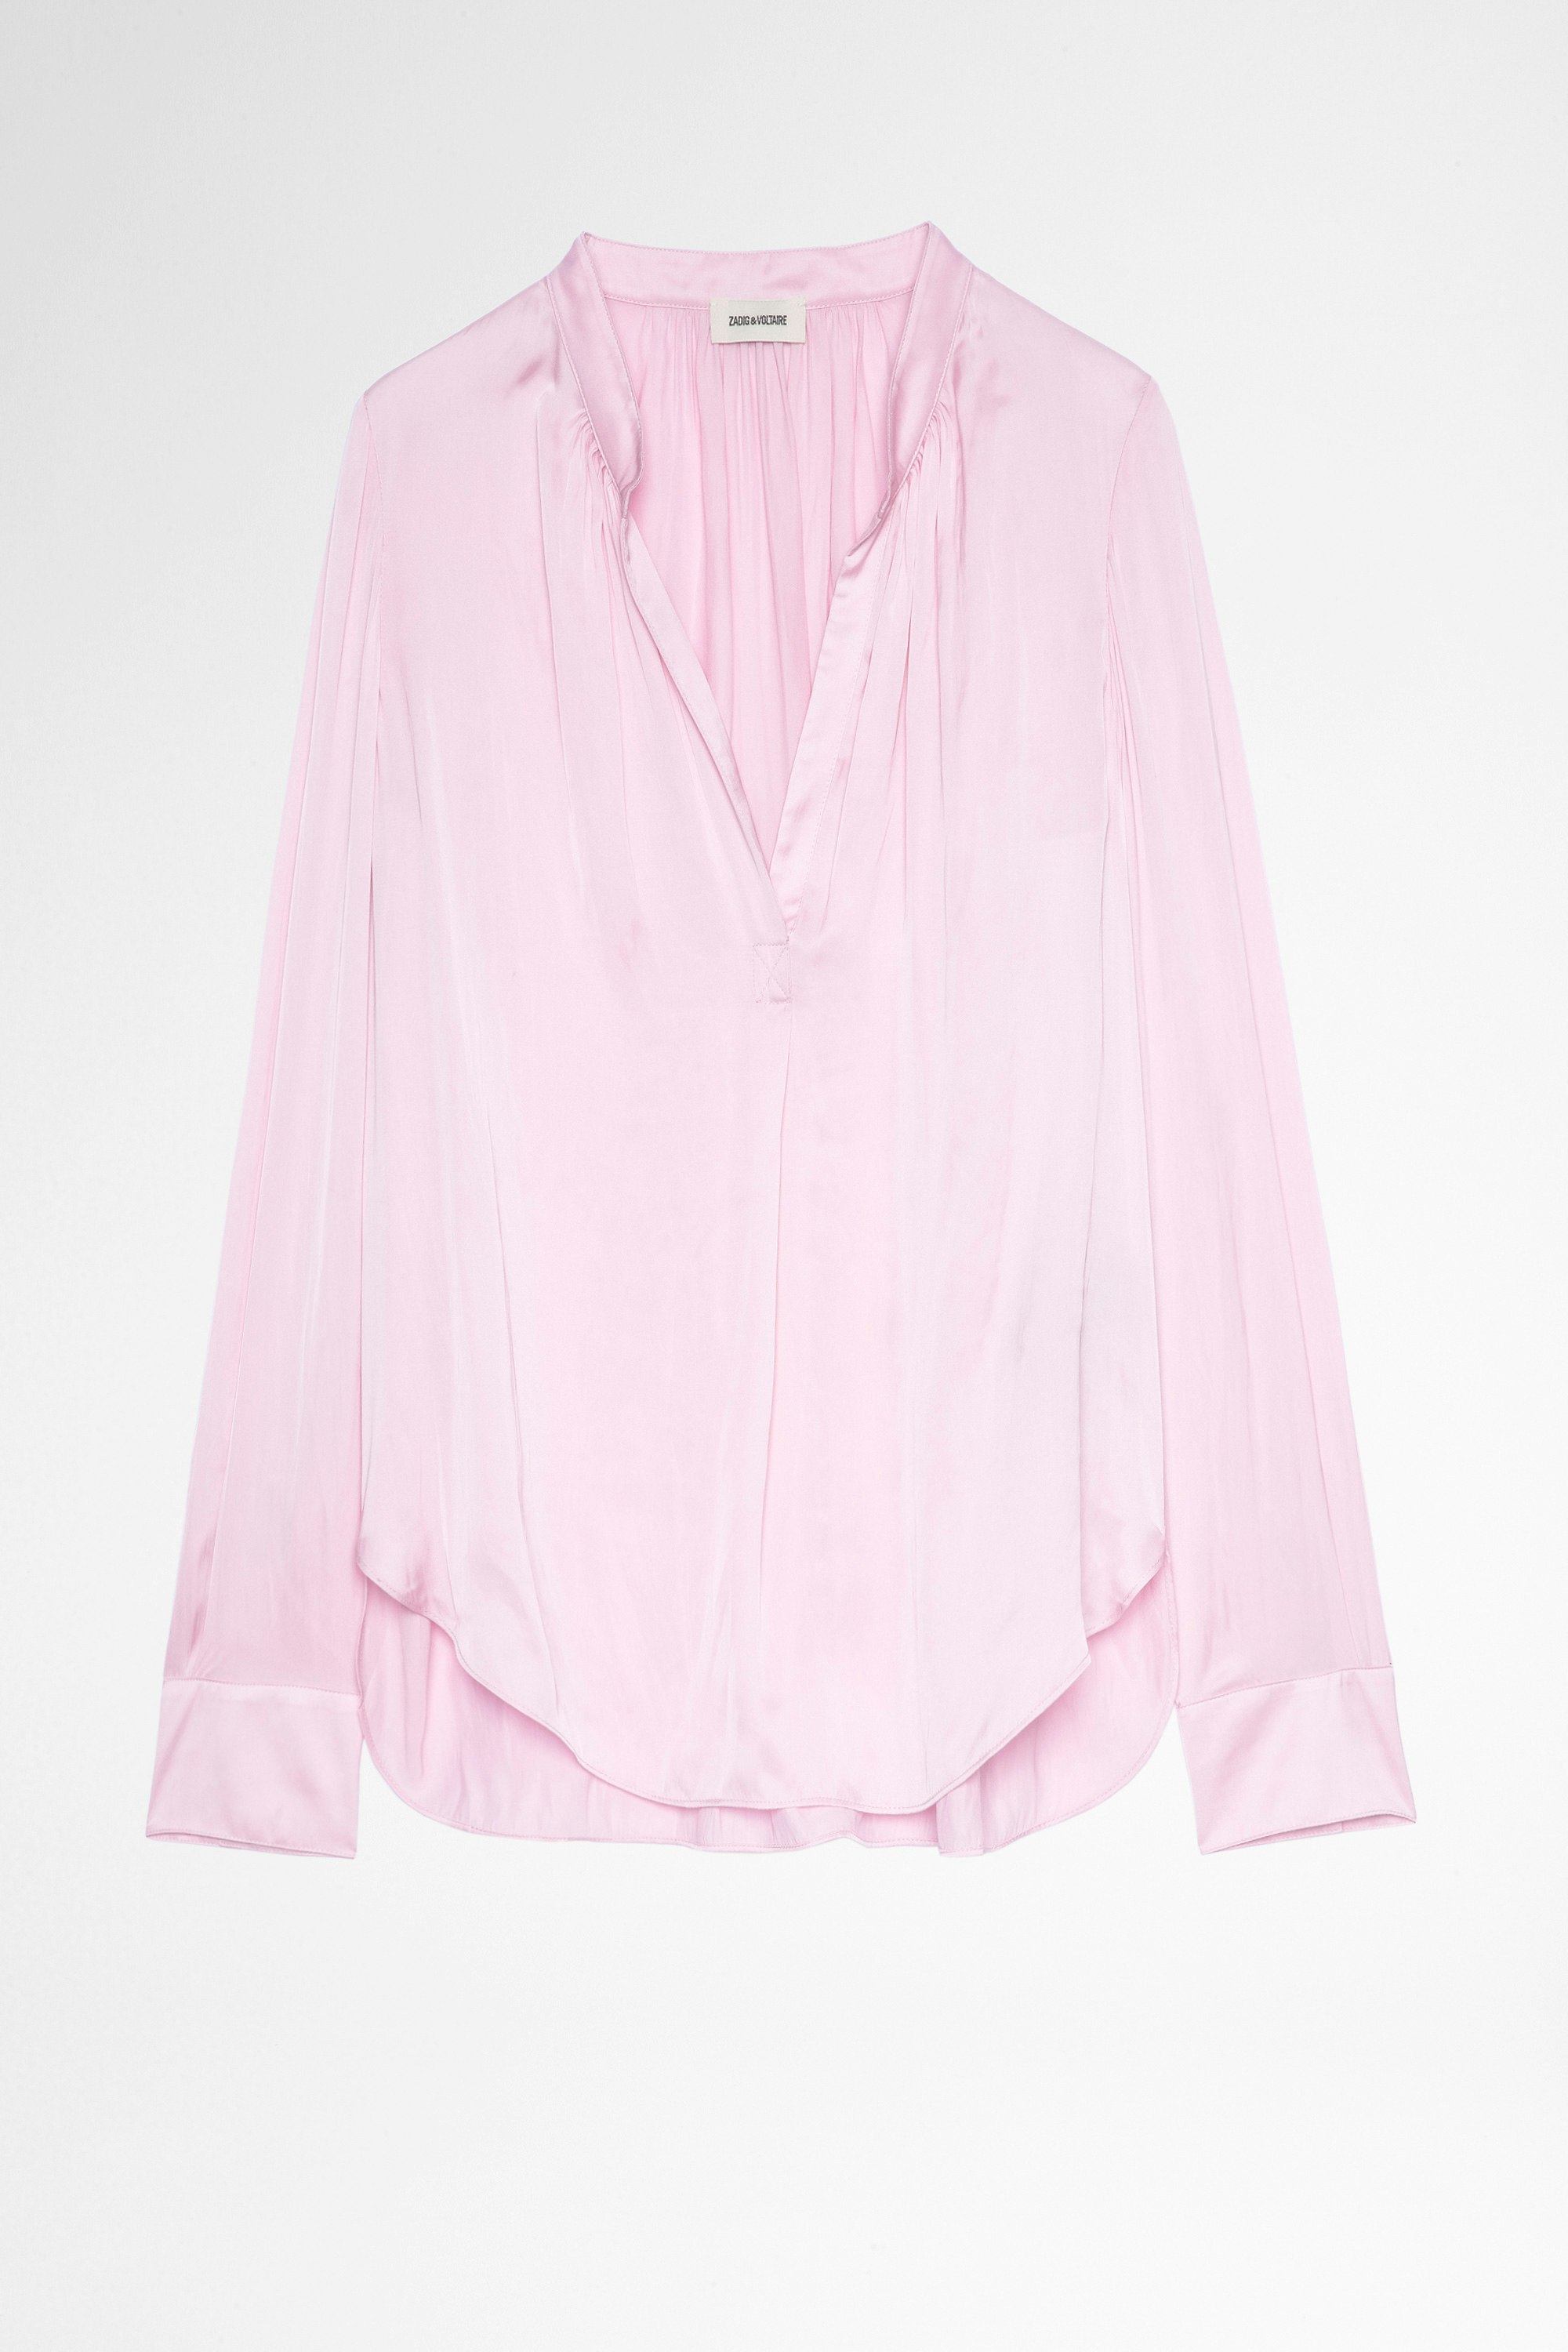 Tink Satin トップス Women's long-sleeved pink satin shirt